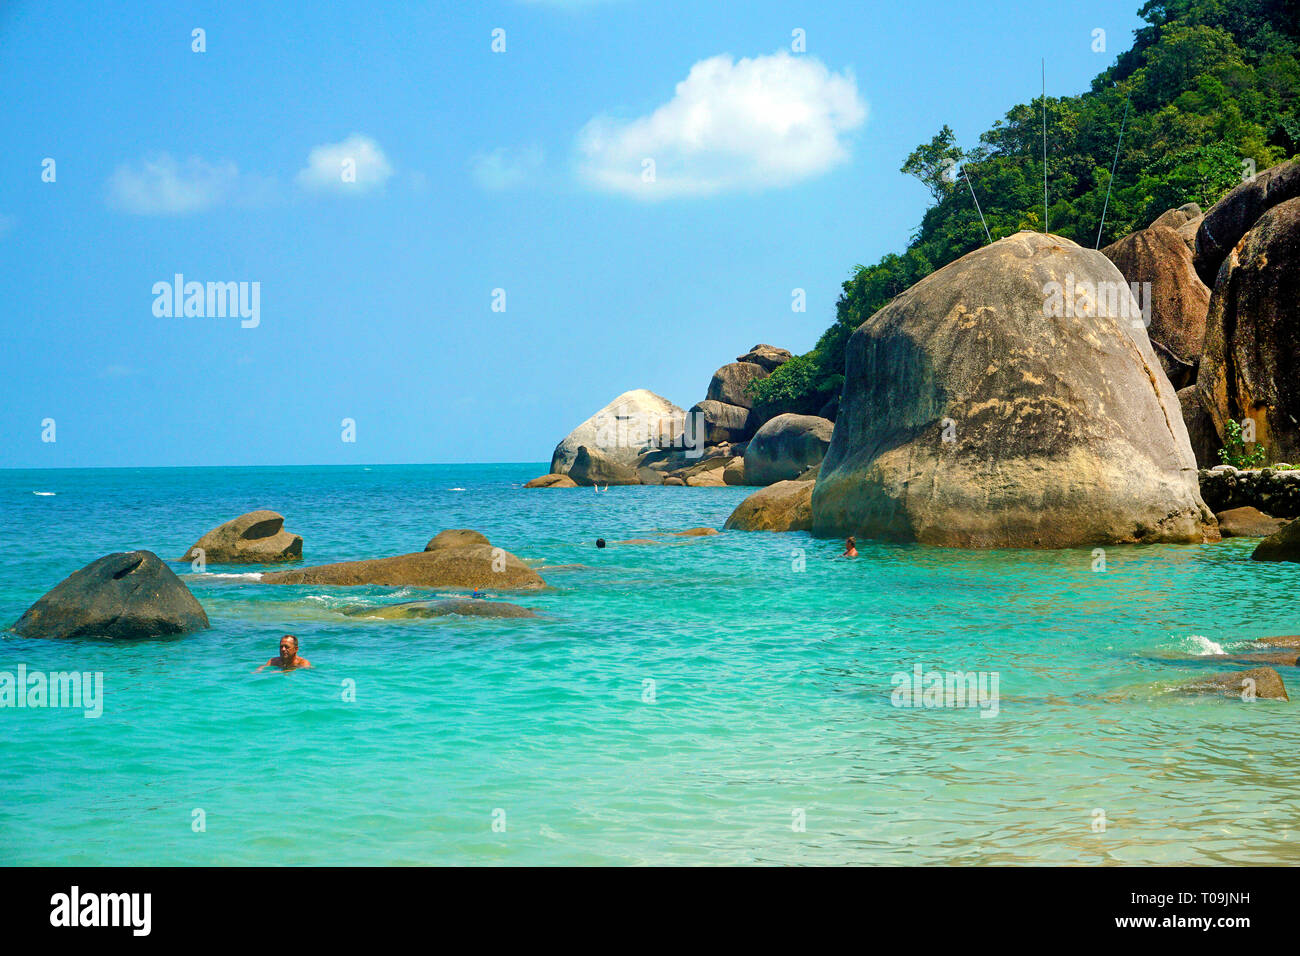 Silver Beach, Chrystal Bay, Koh Samui, Golf von Thailand, Thailand | Silver Beach, Chrystal Bay, Koh Samui, Gulf of Thailand, Thailand Stock Photo